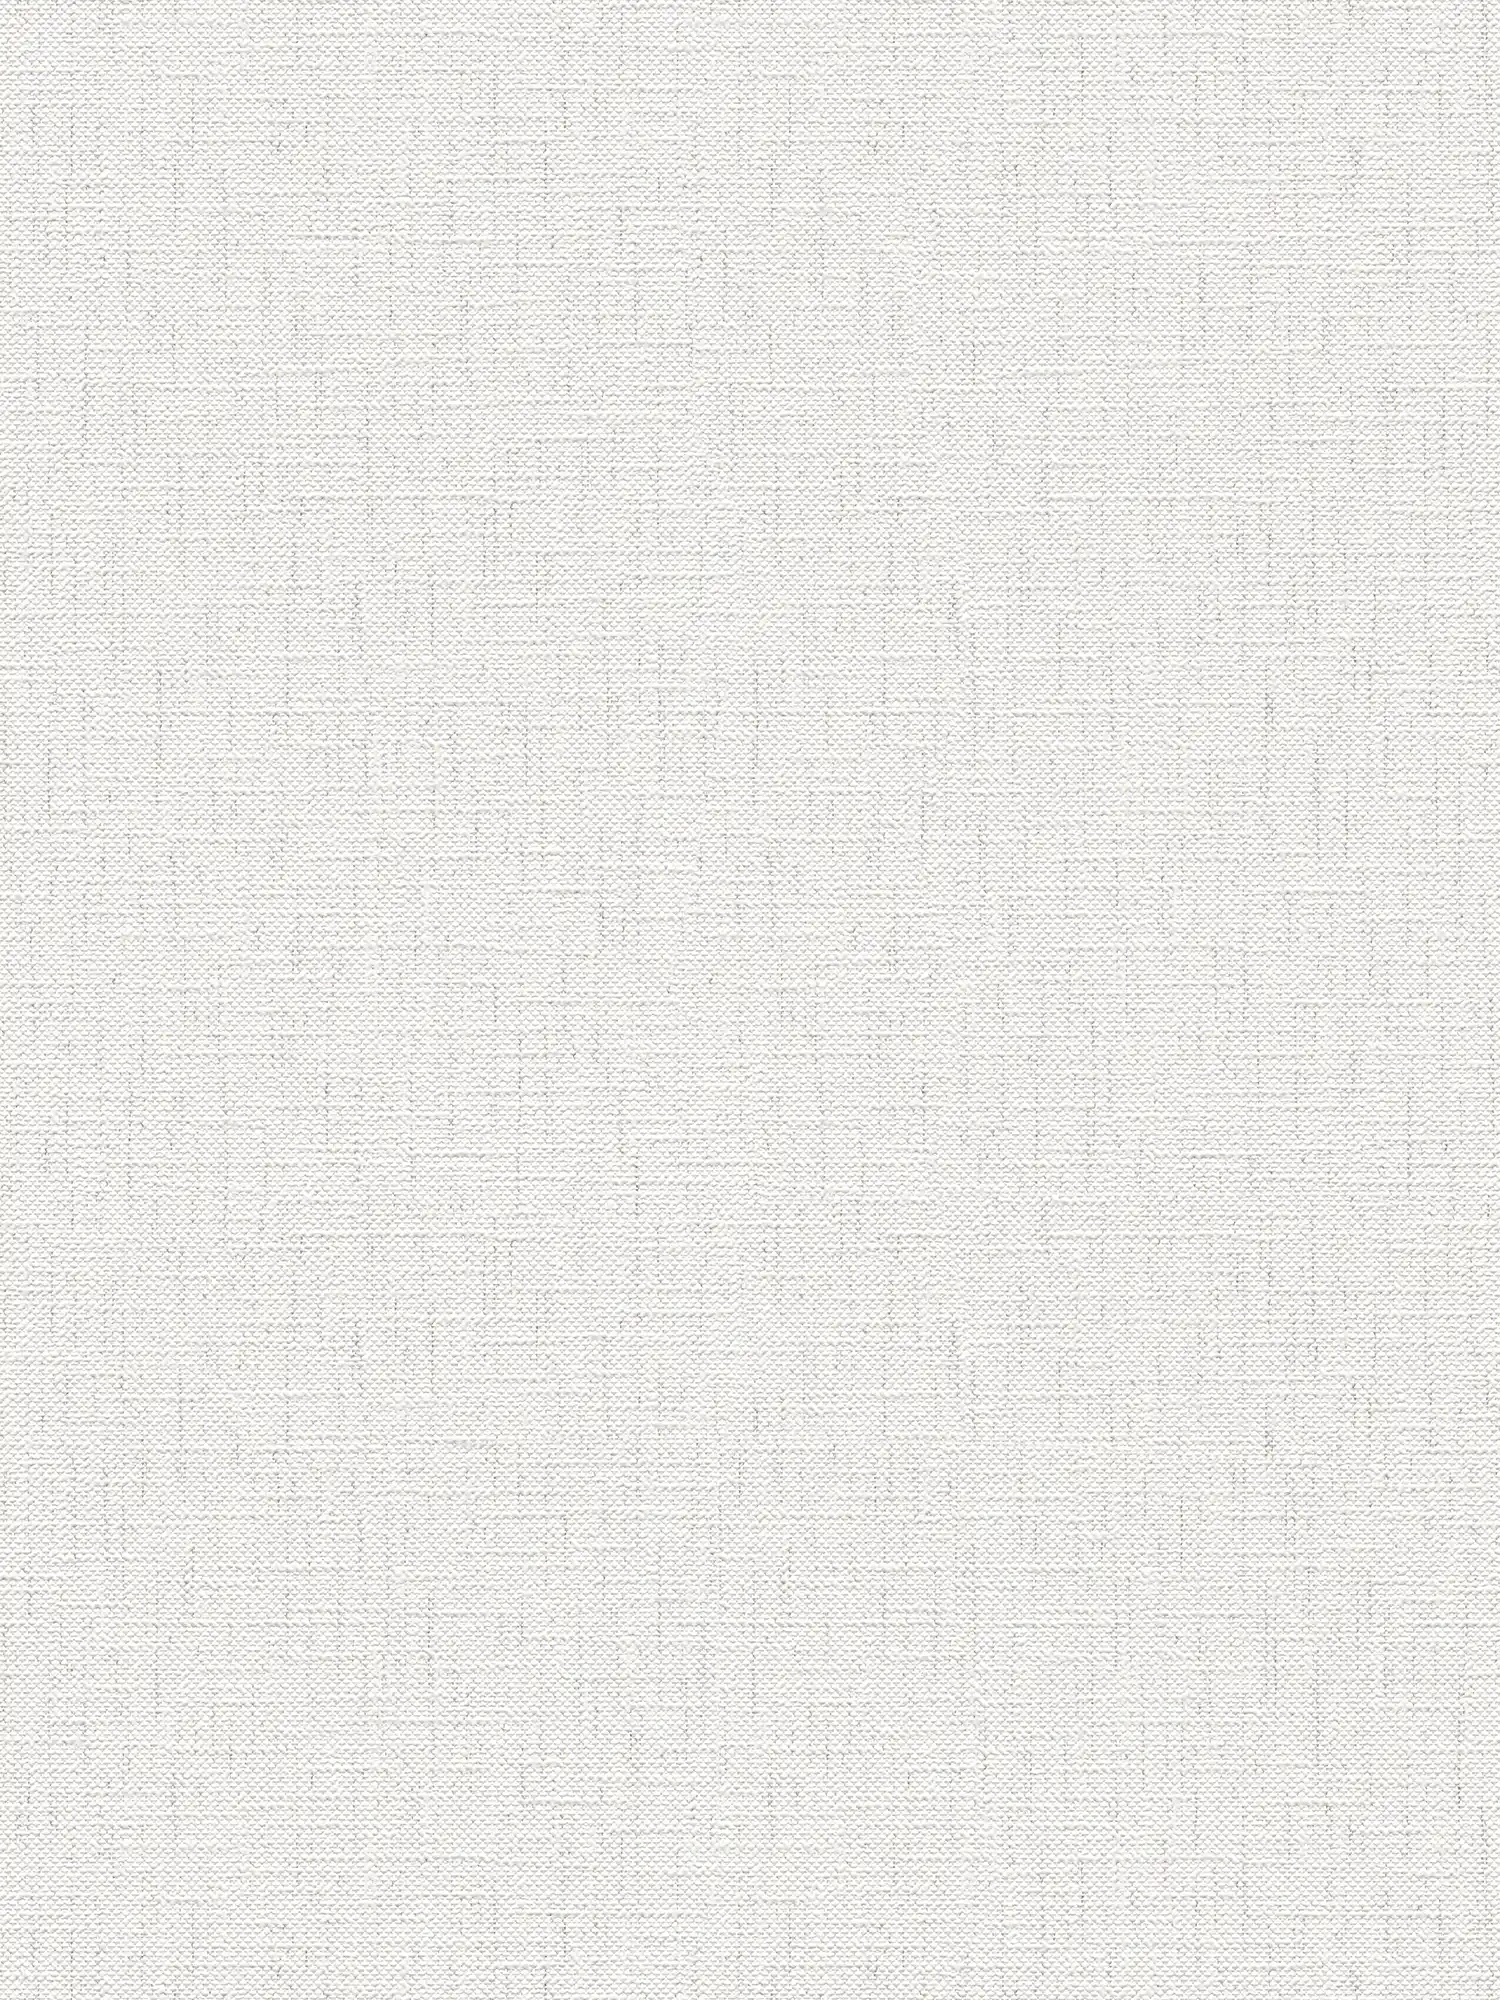 Textiloptik Papiertapete mit melierter Färbung – Grau, Weiß
